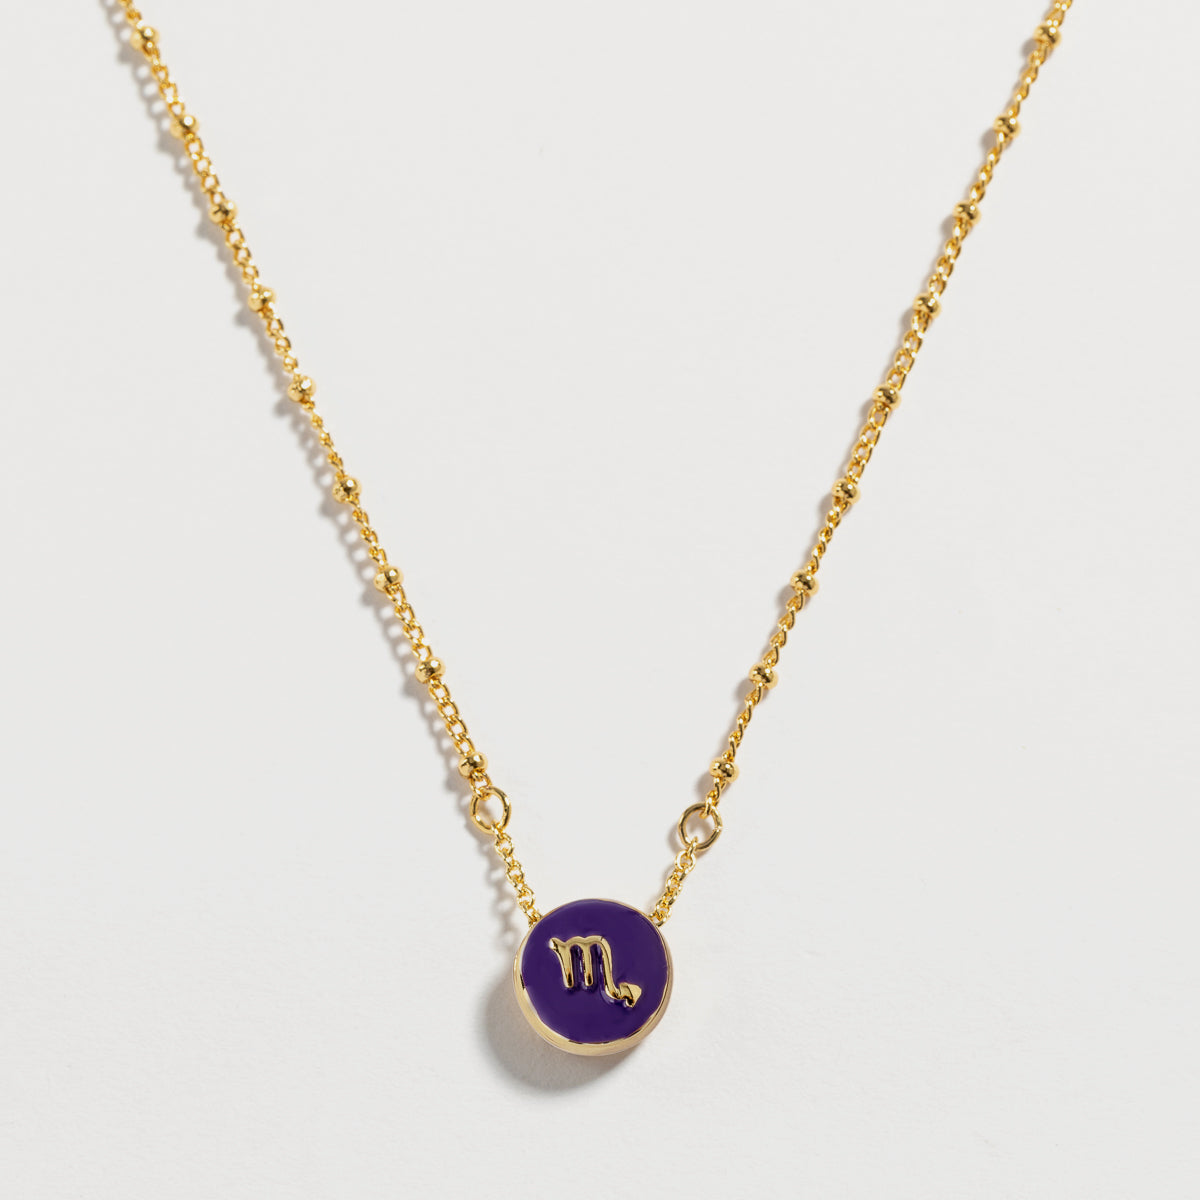 astrological sign scorpio necklace